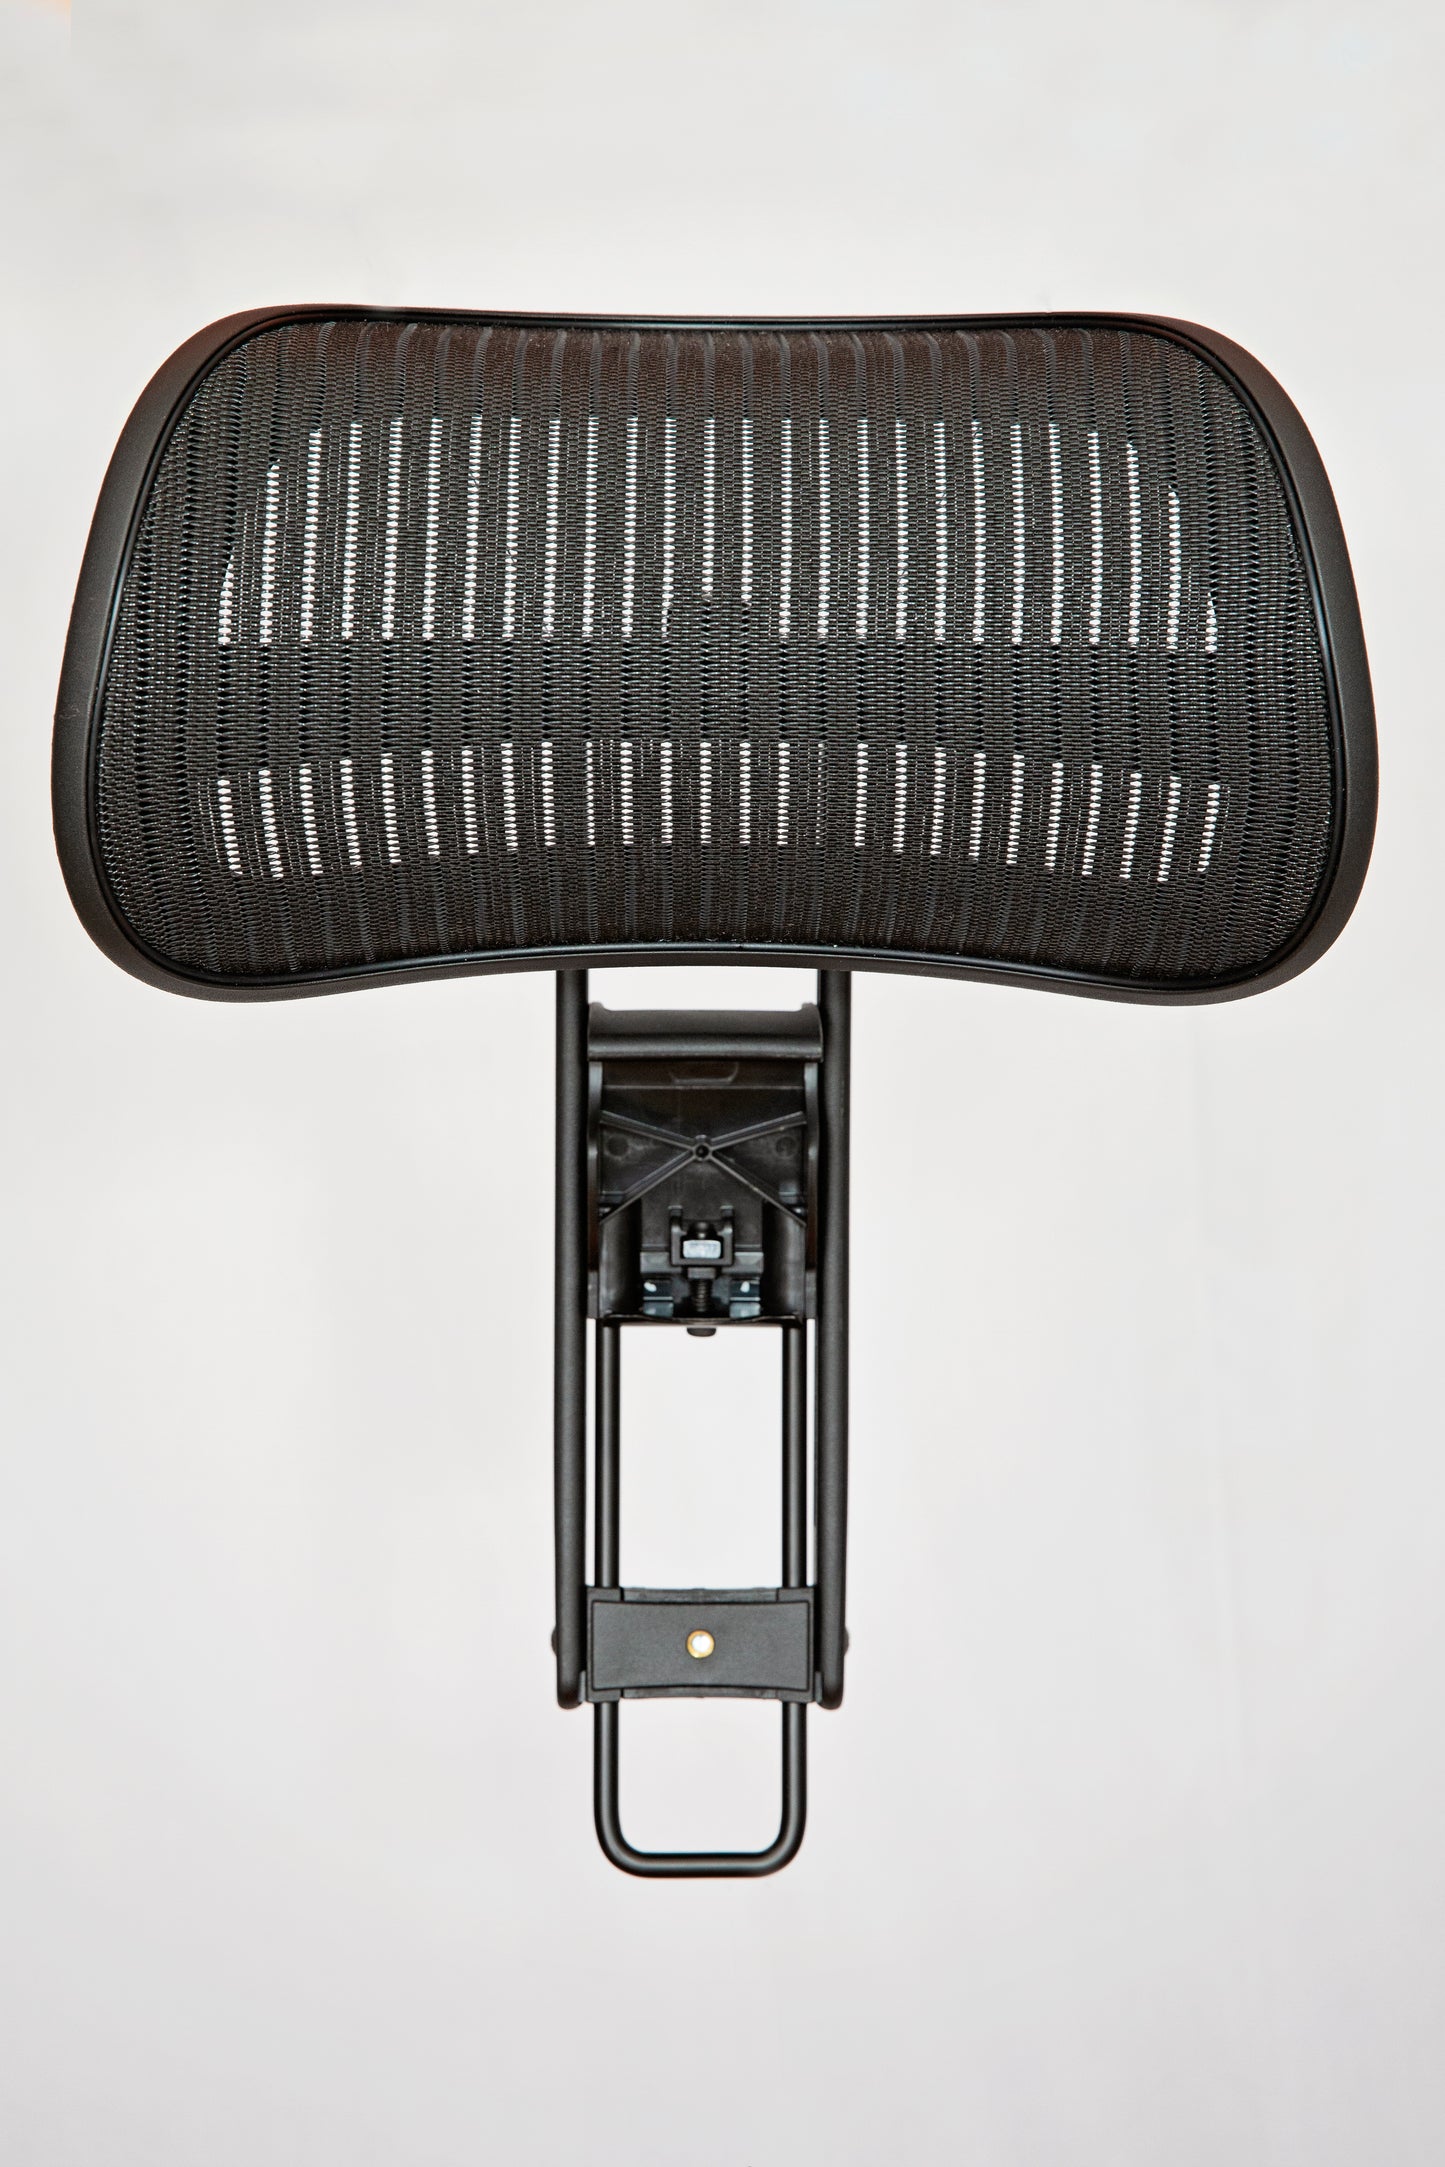 Atlas Cushion Headrest For Herman Miller Aeron Chair